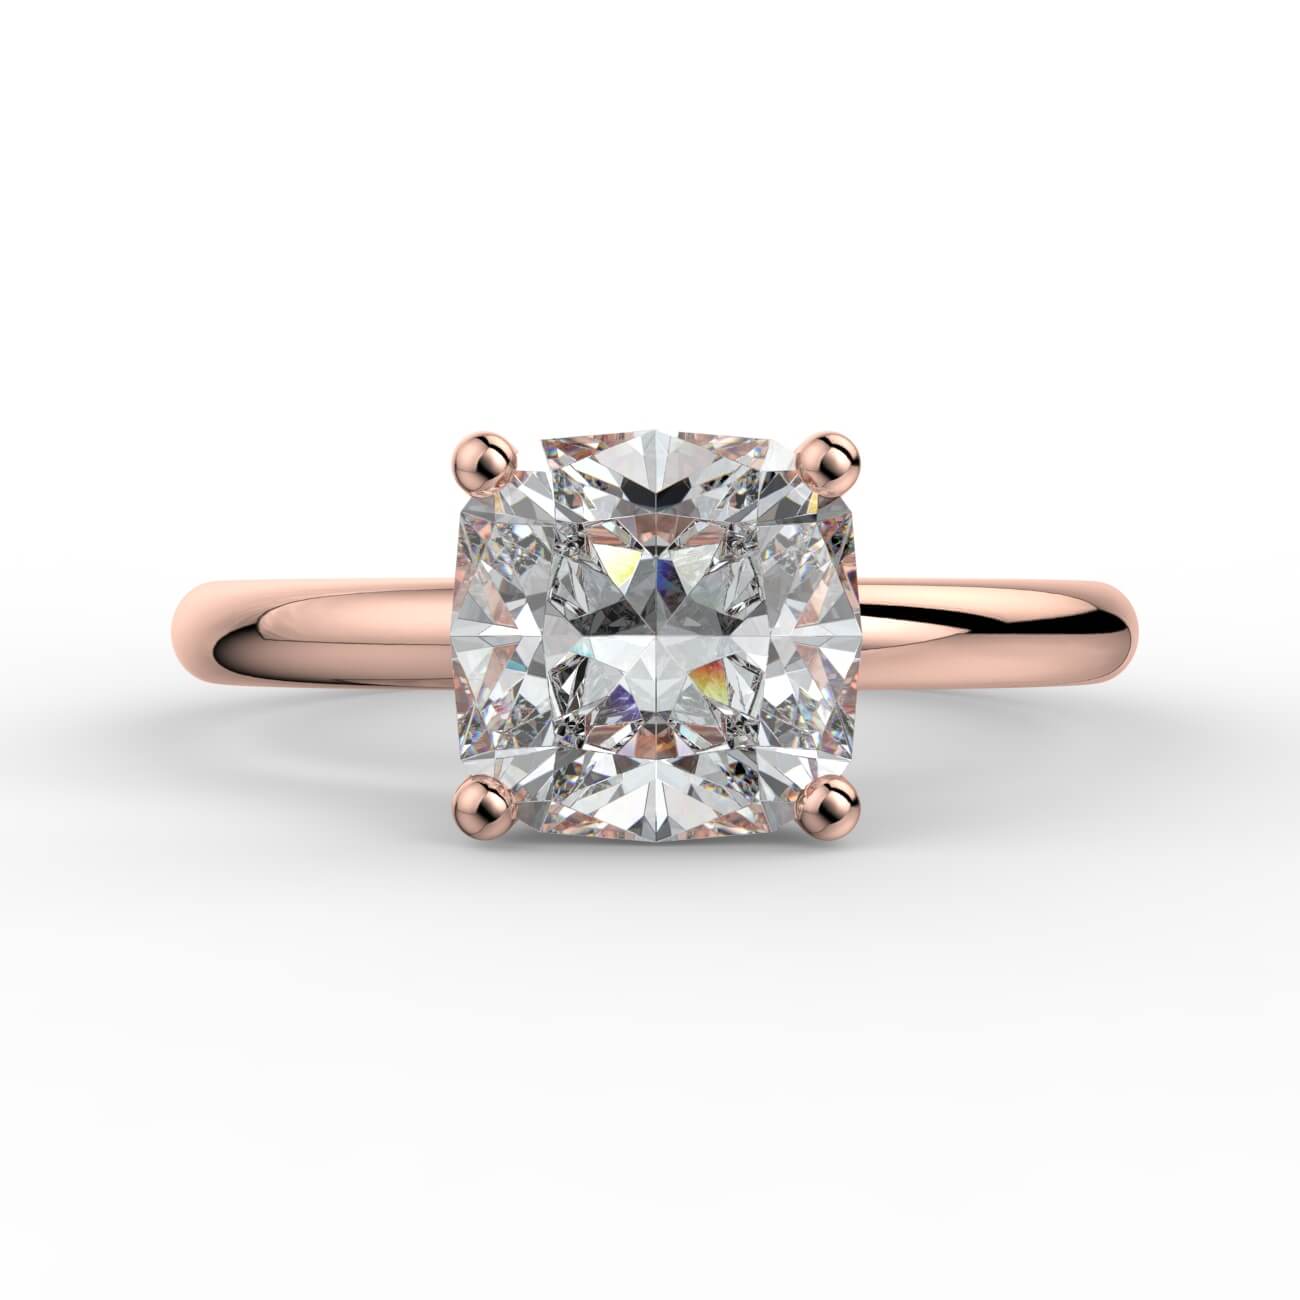 Solitaire cushion cut diamond engagement ring in rose gold – Australian Diamond Network